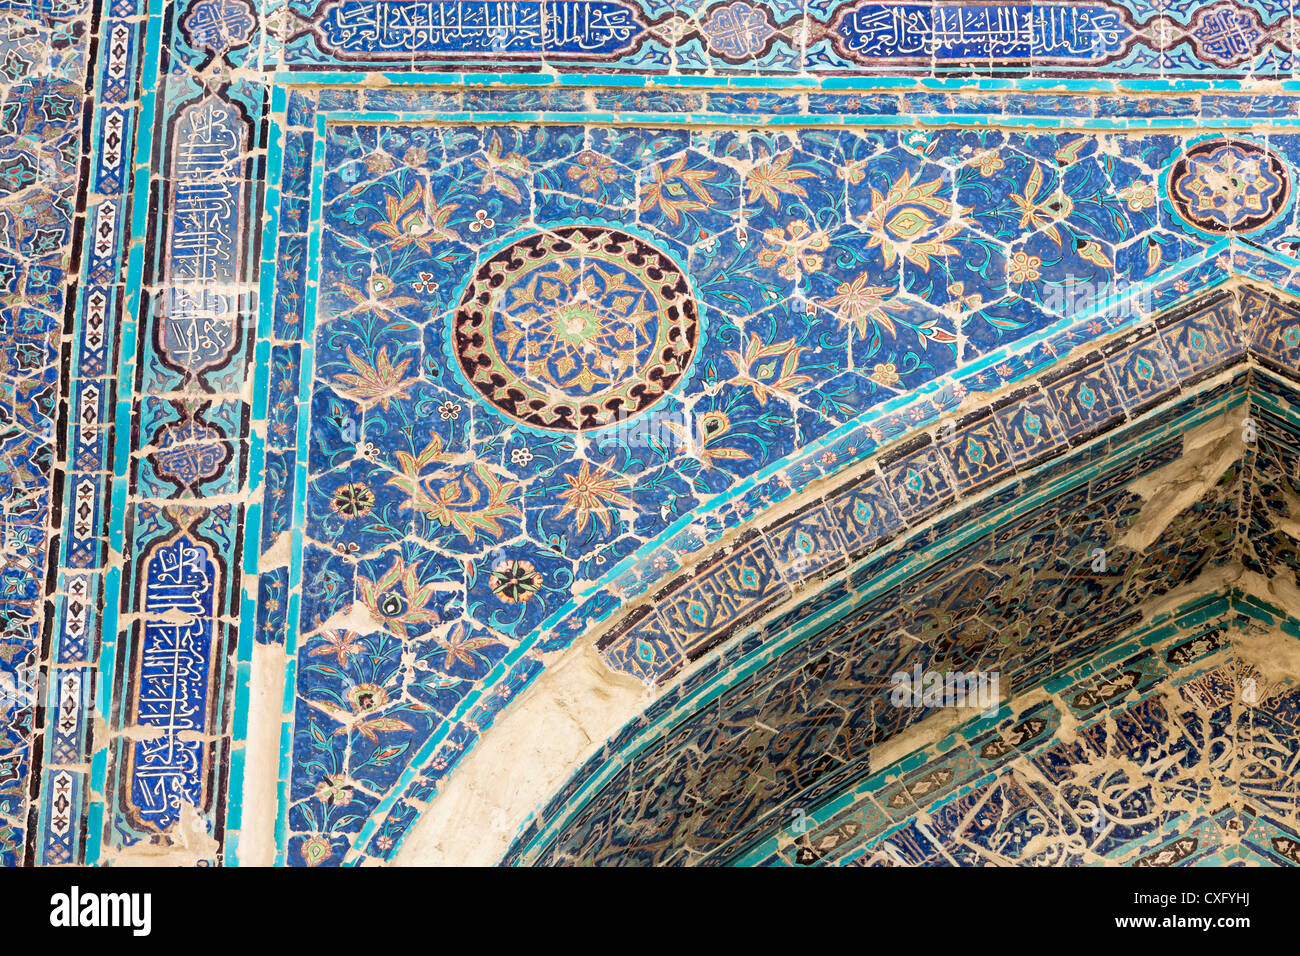 Dettaglio della cuerda seca piastrelle, Aq Saray, Timur's Palace, Shahr-i Sabz, Uzbekistan Foto Stock